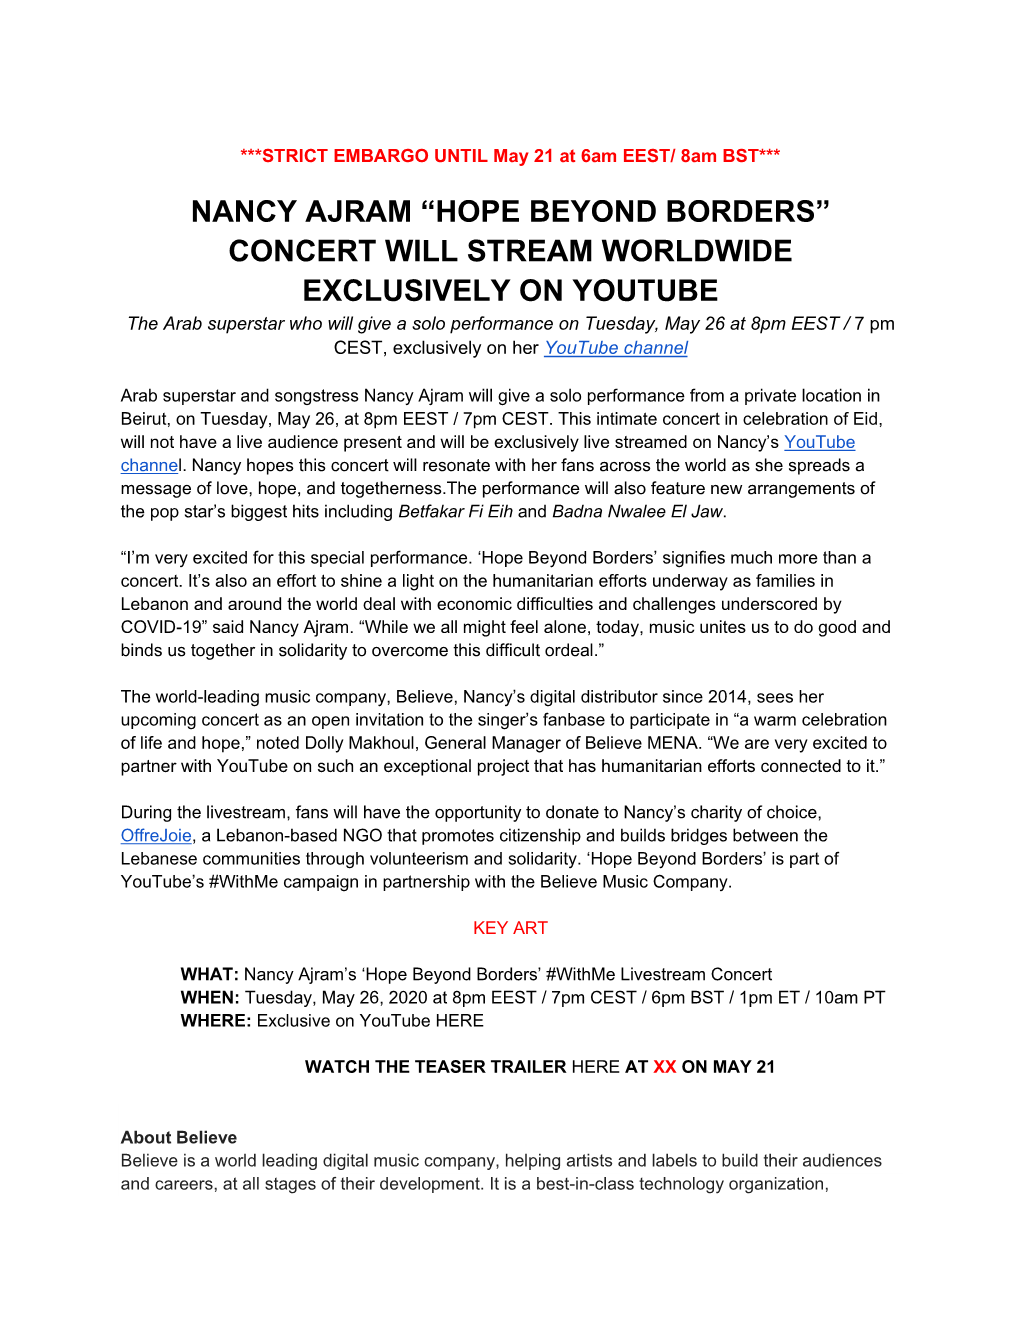 Nancy Ajram “Hope Beyond Borders” Concert